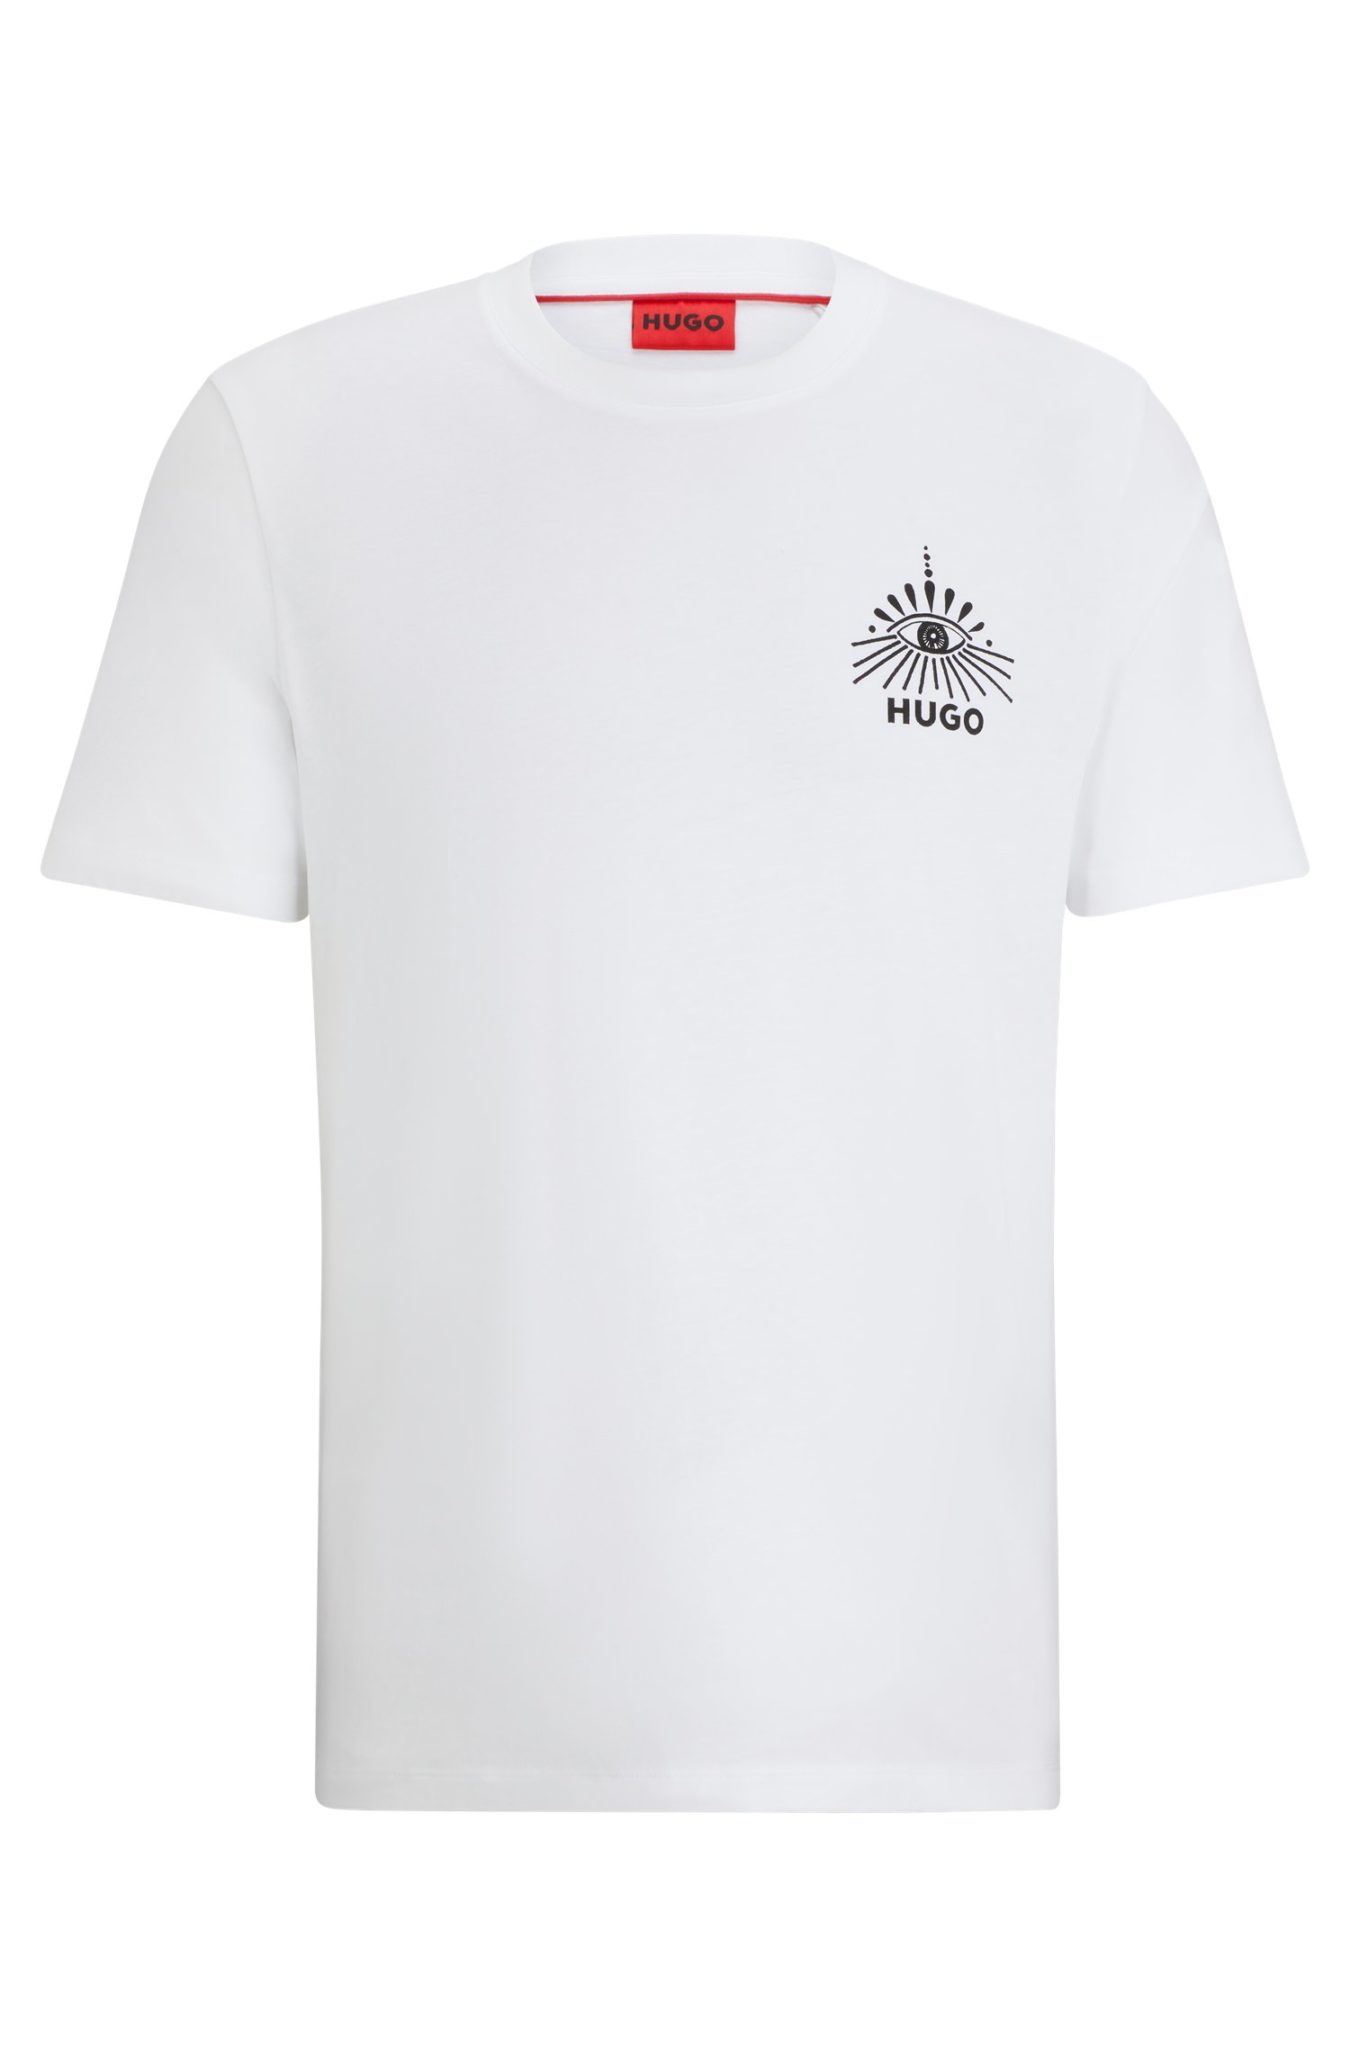 Hugo Boss T-shirt Regular Fit en jersey de coton avec motif artistique saisonnier